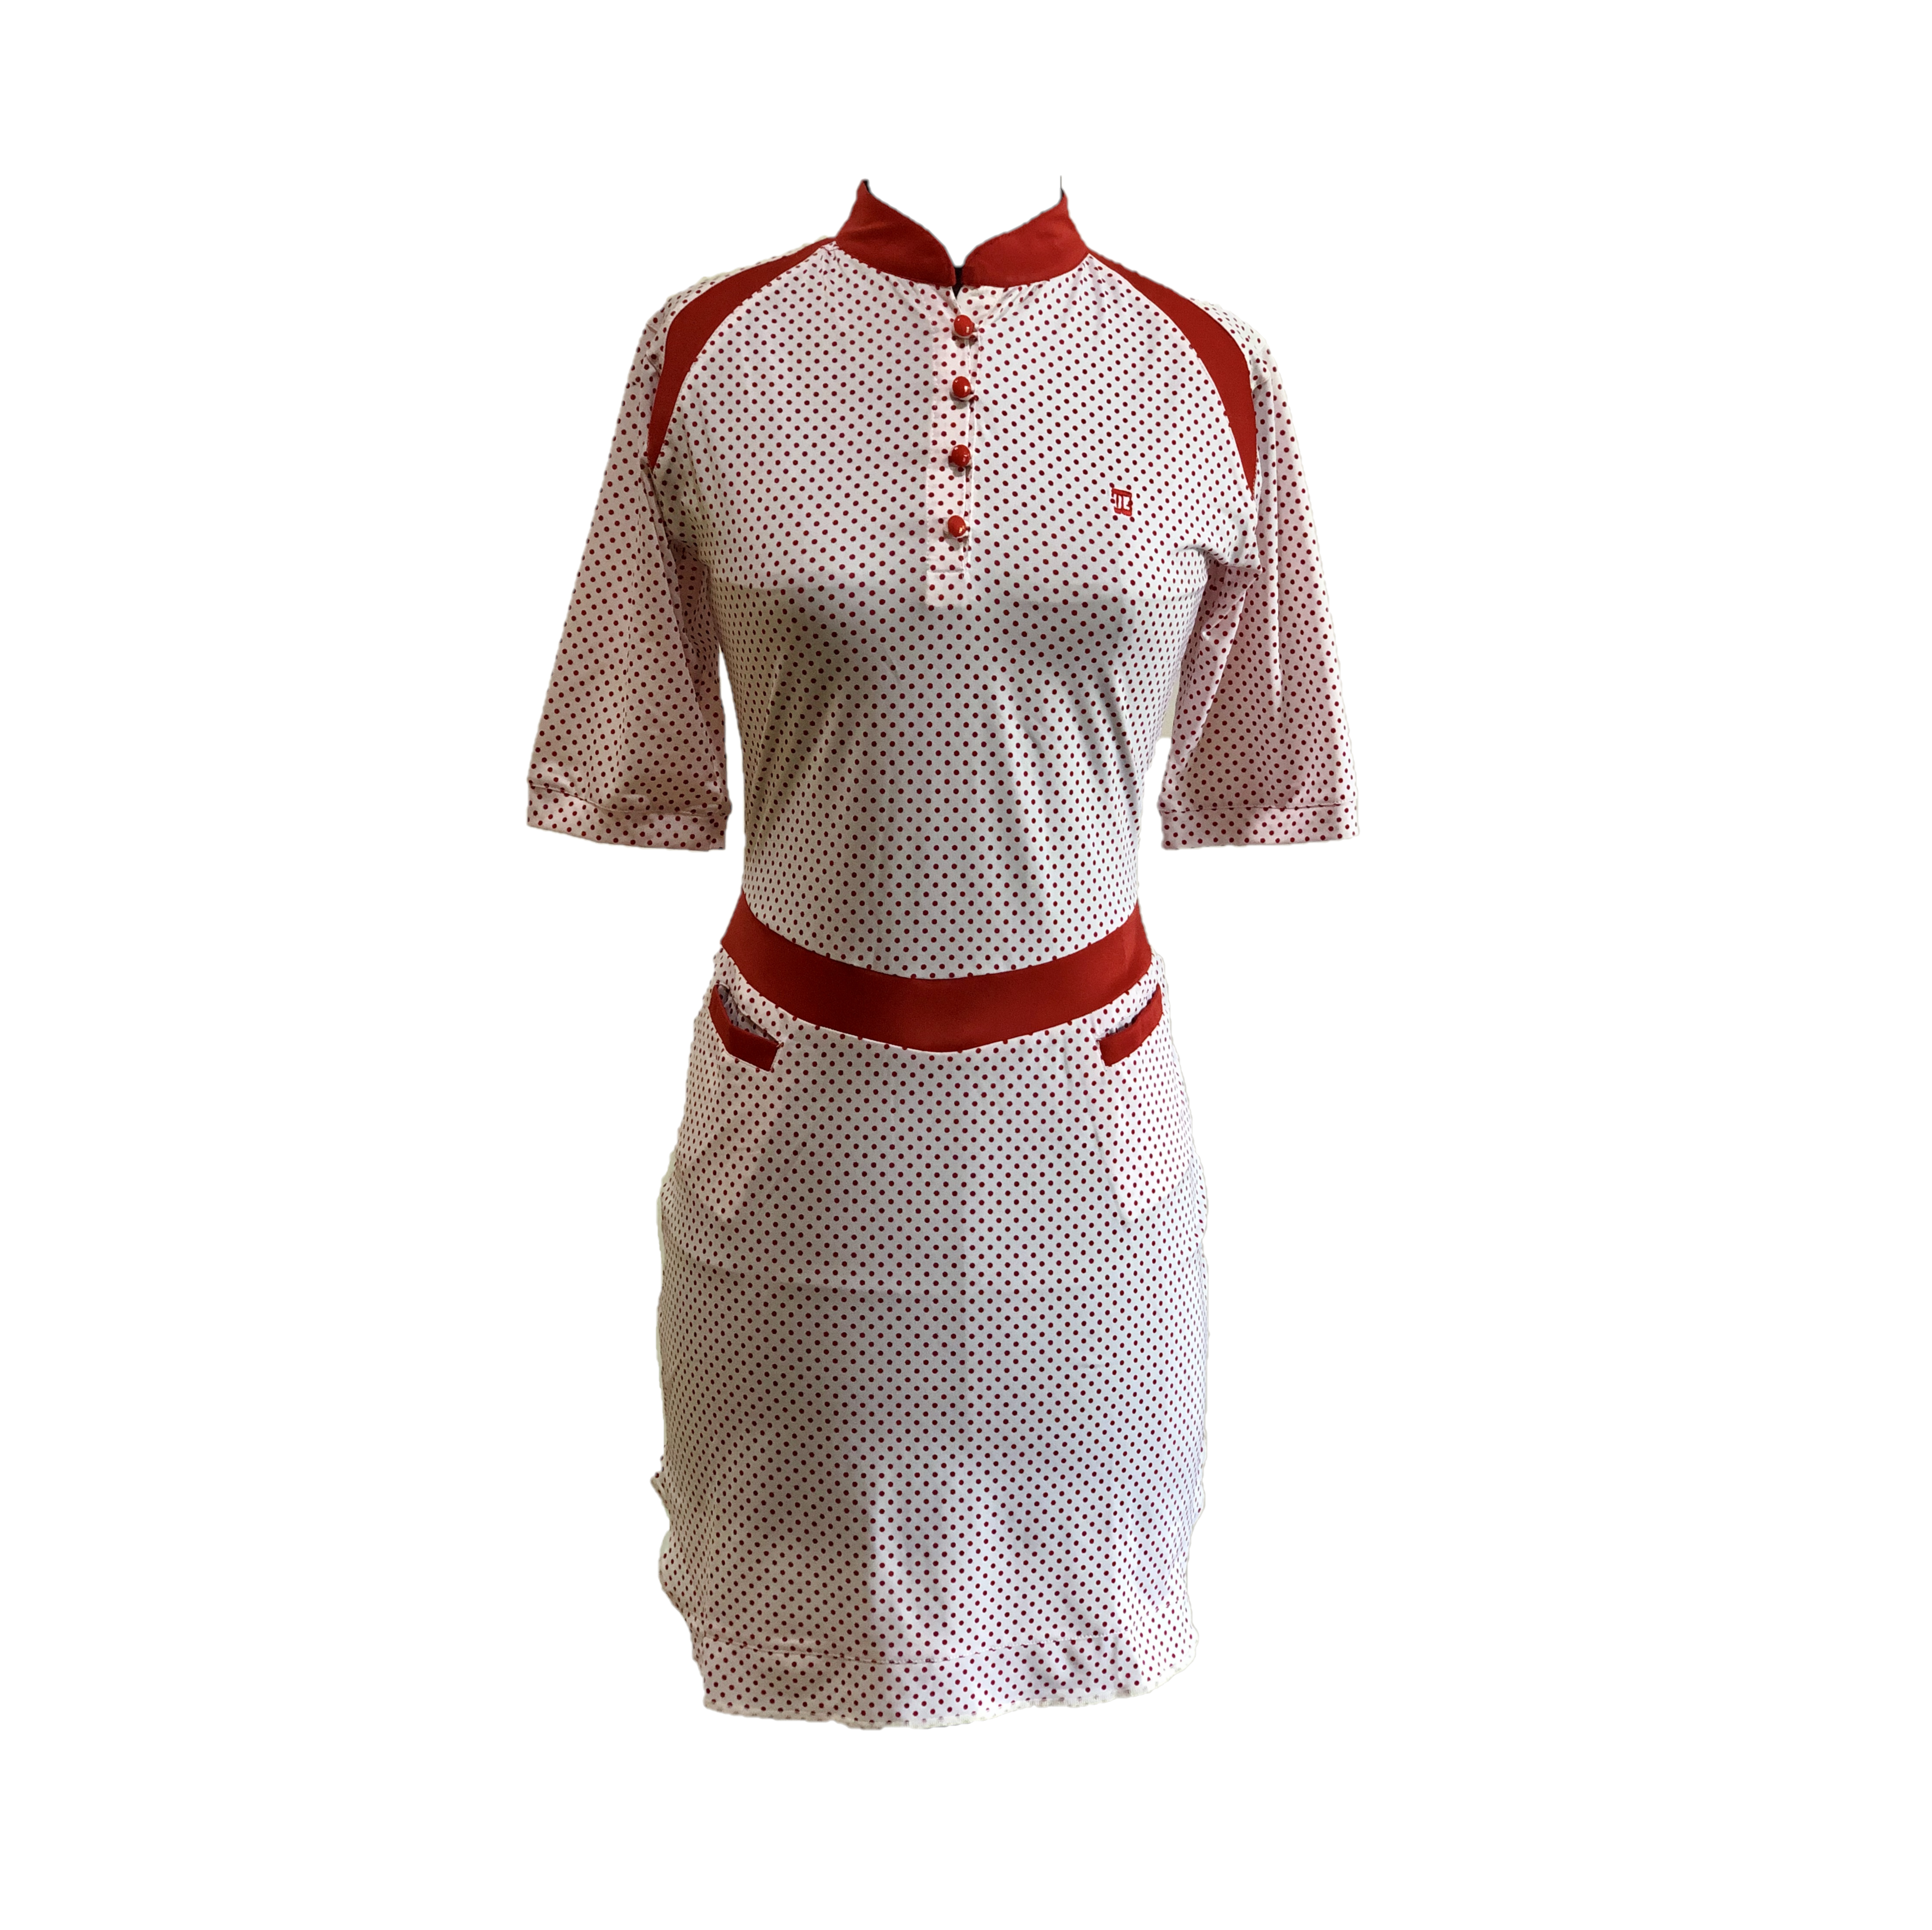 GD-008A || Golf Dress Pink with Red Polka Dots Shirt Tail Hem